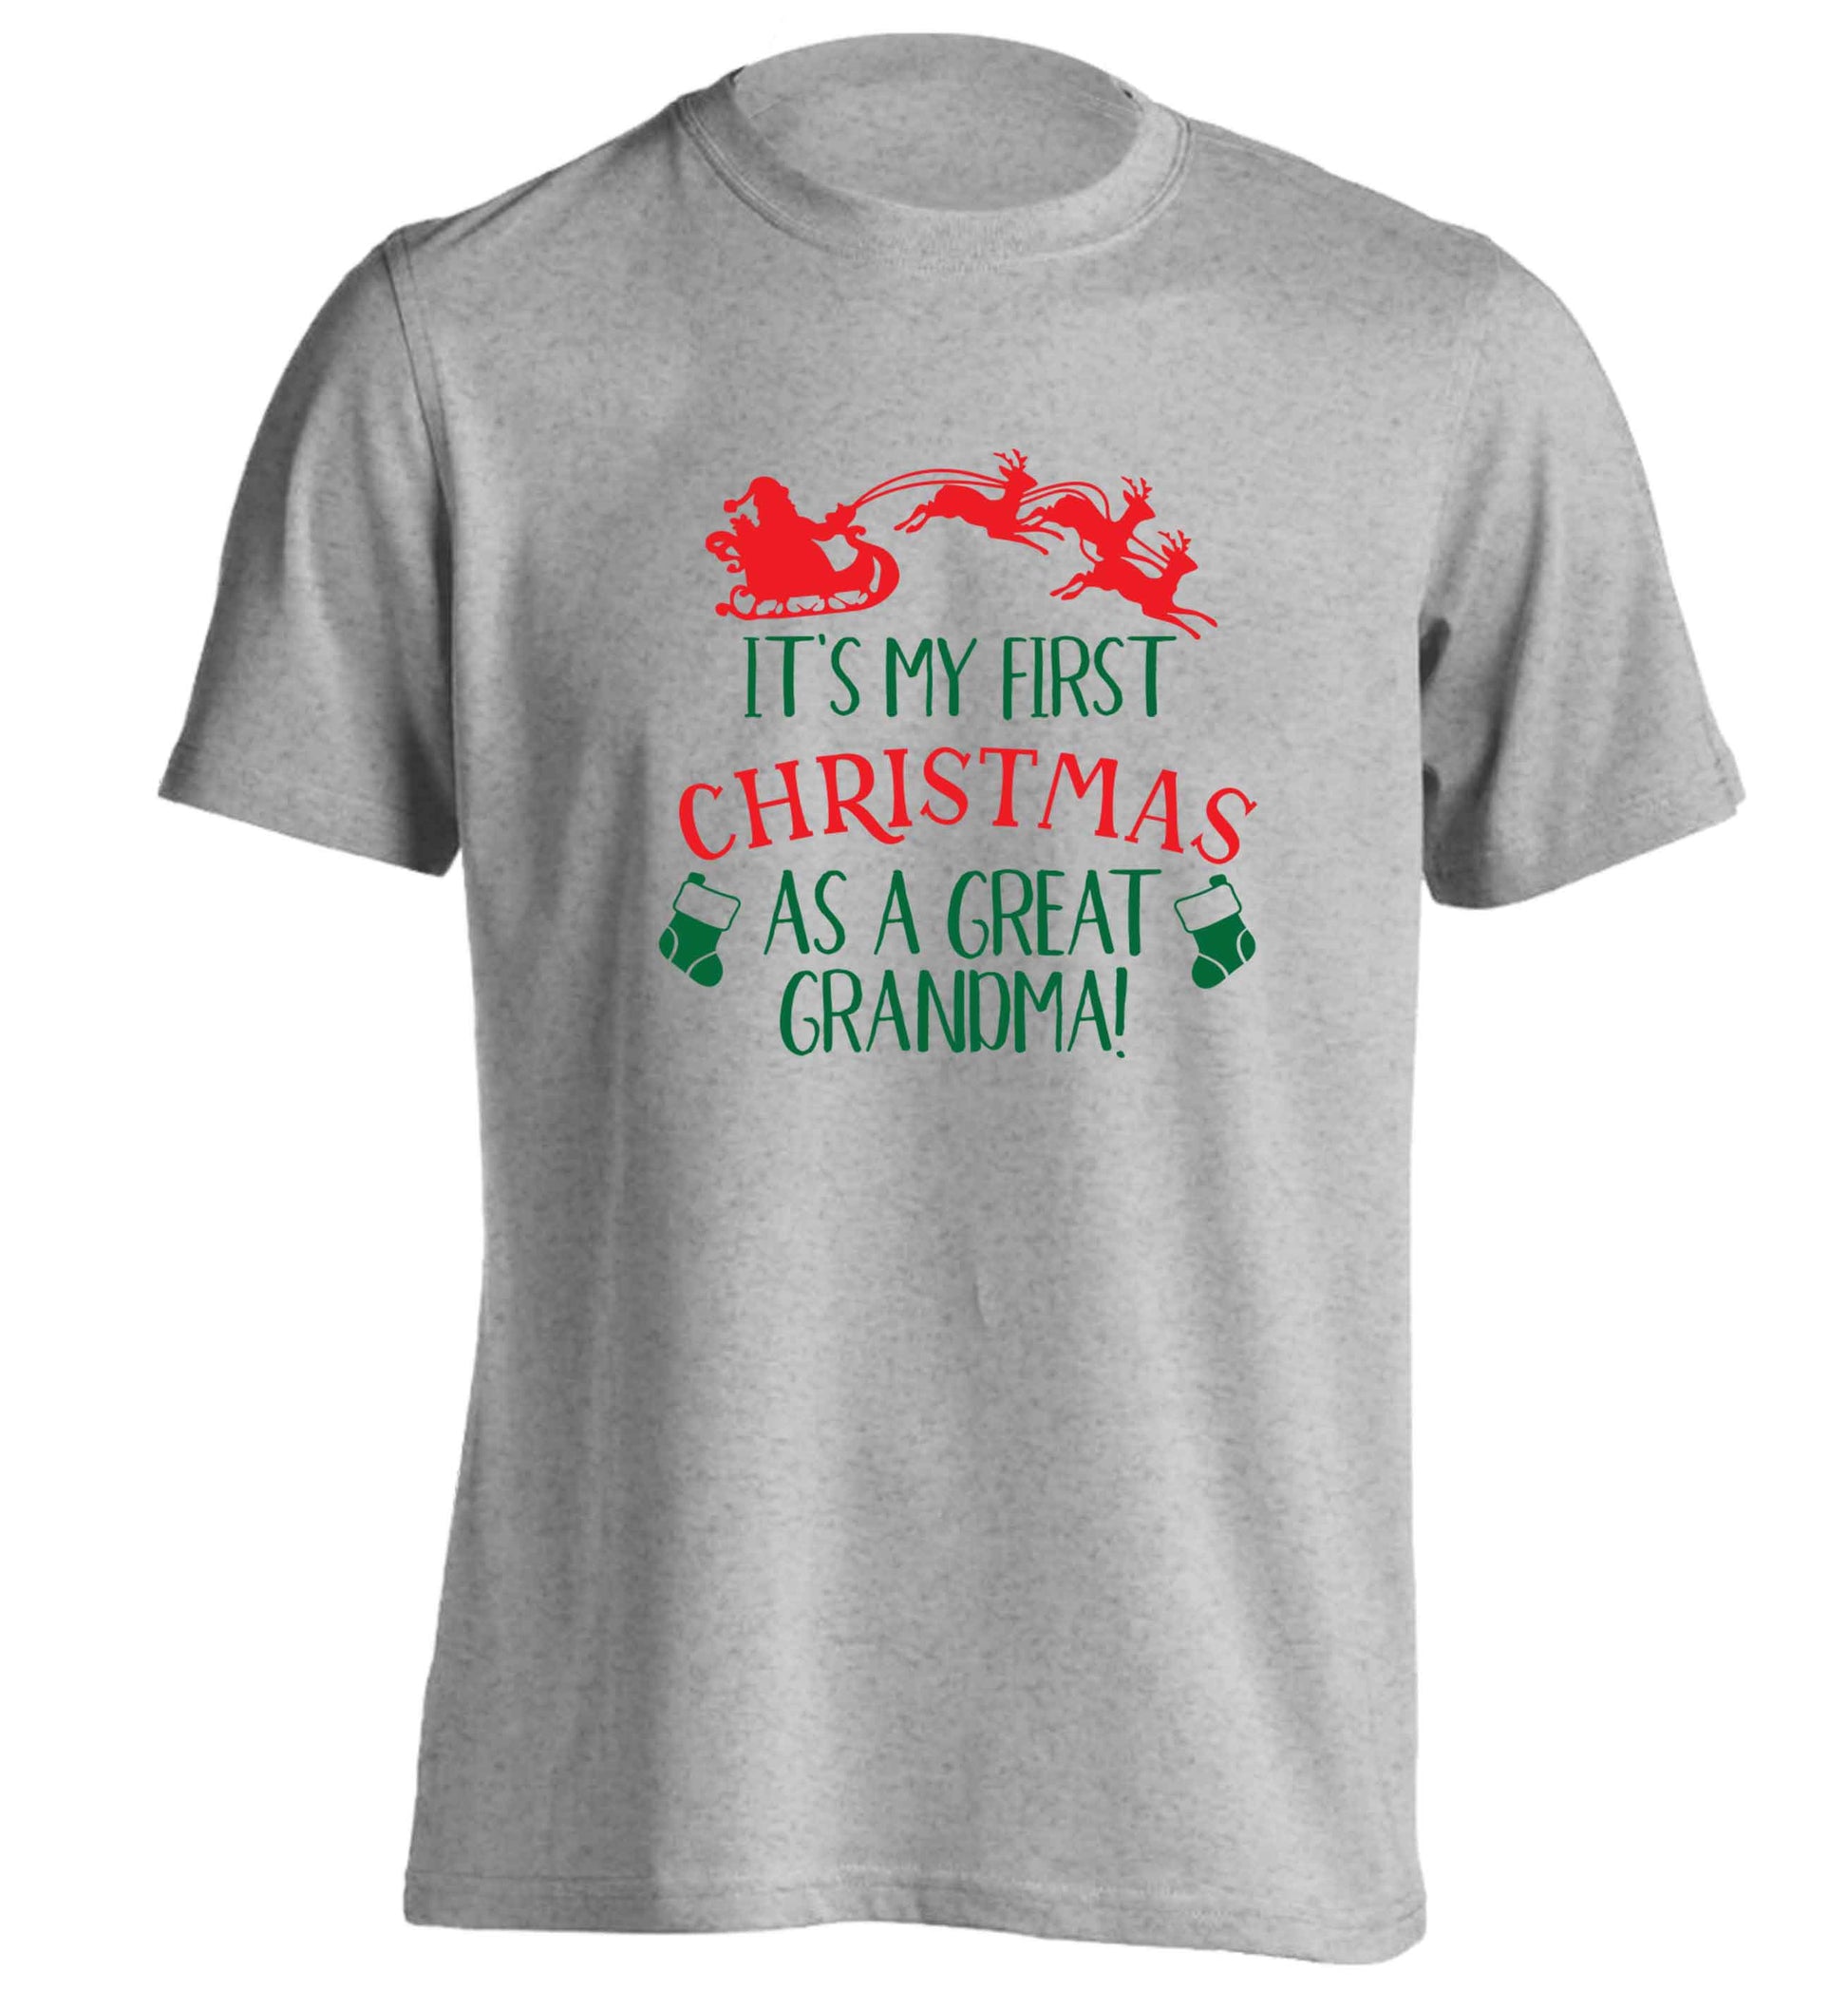 It's my first Christmas as a great grandma! adults unisex grey Tshirt 2XL